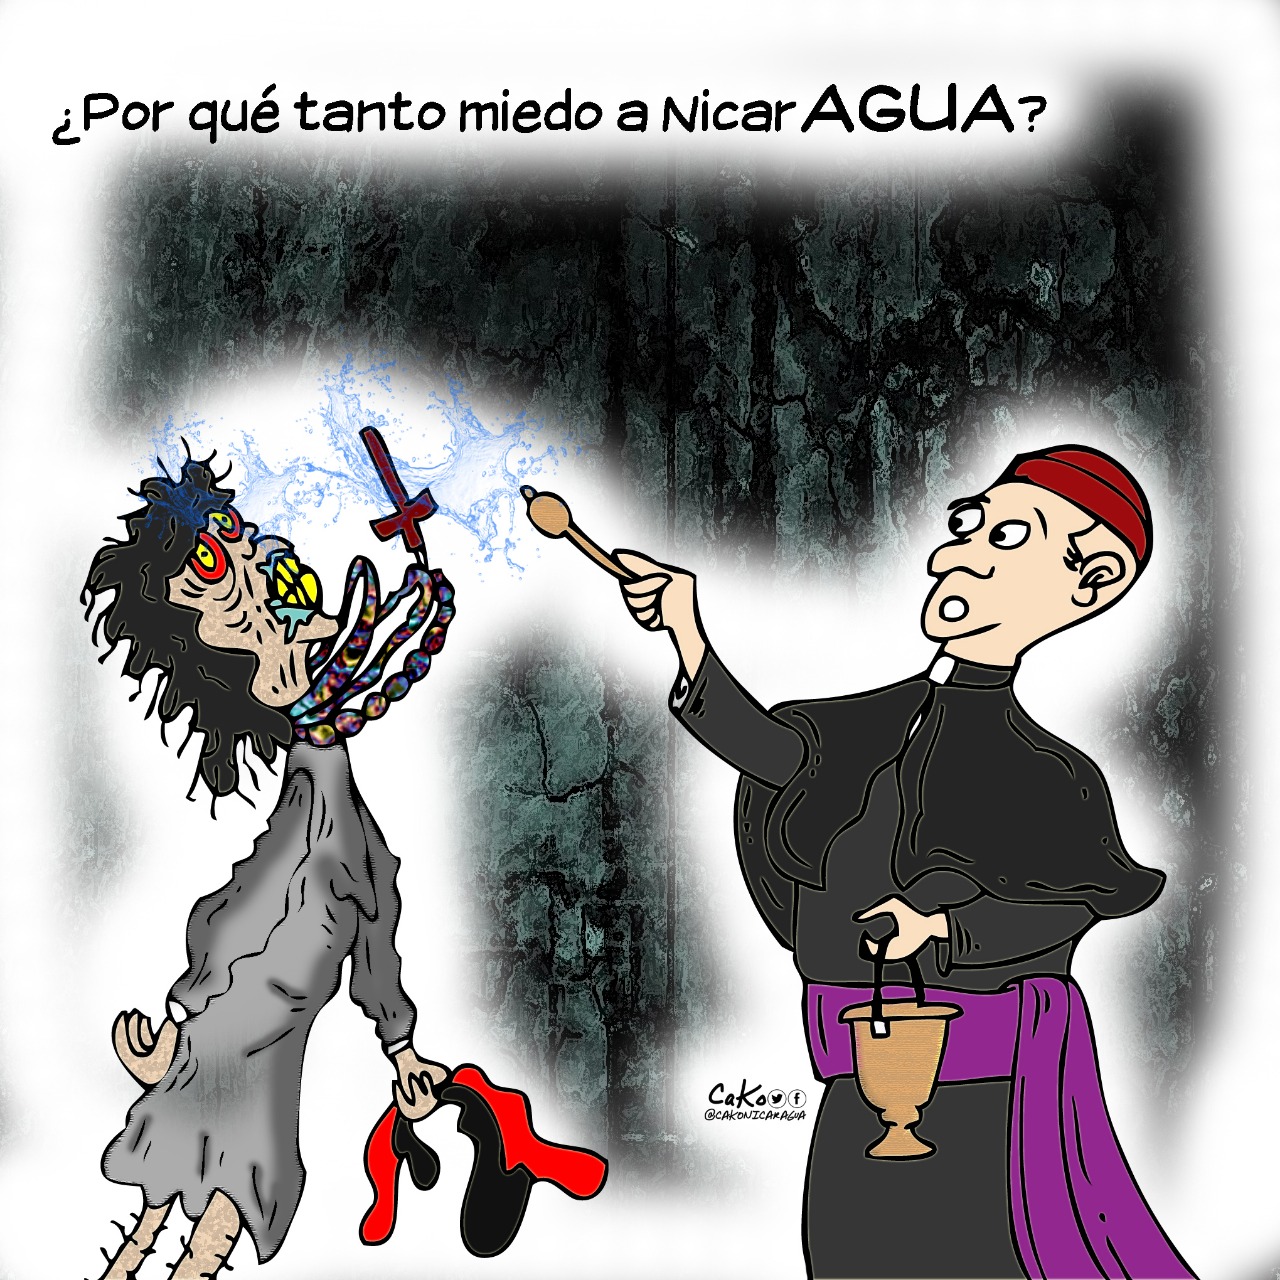 La Caricatura: Miedo a NicarAGUALa Caricatura: Miedo a NicarAGUA